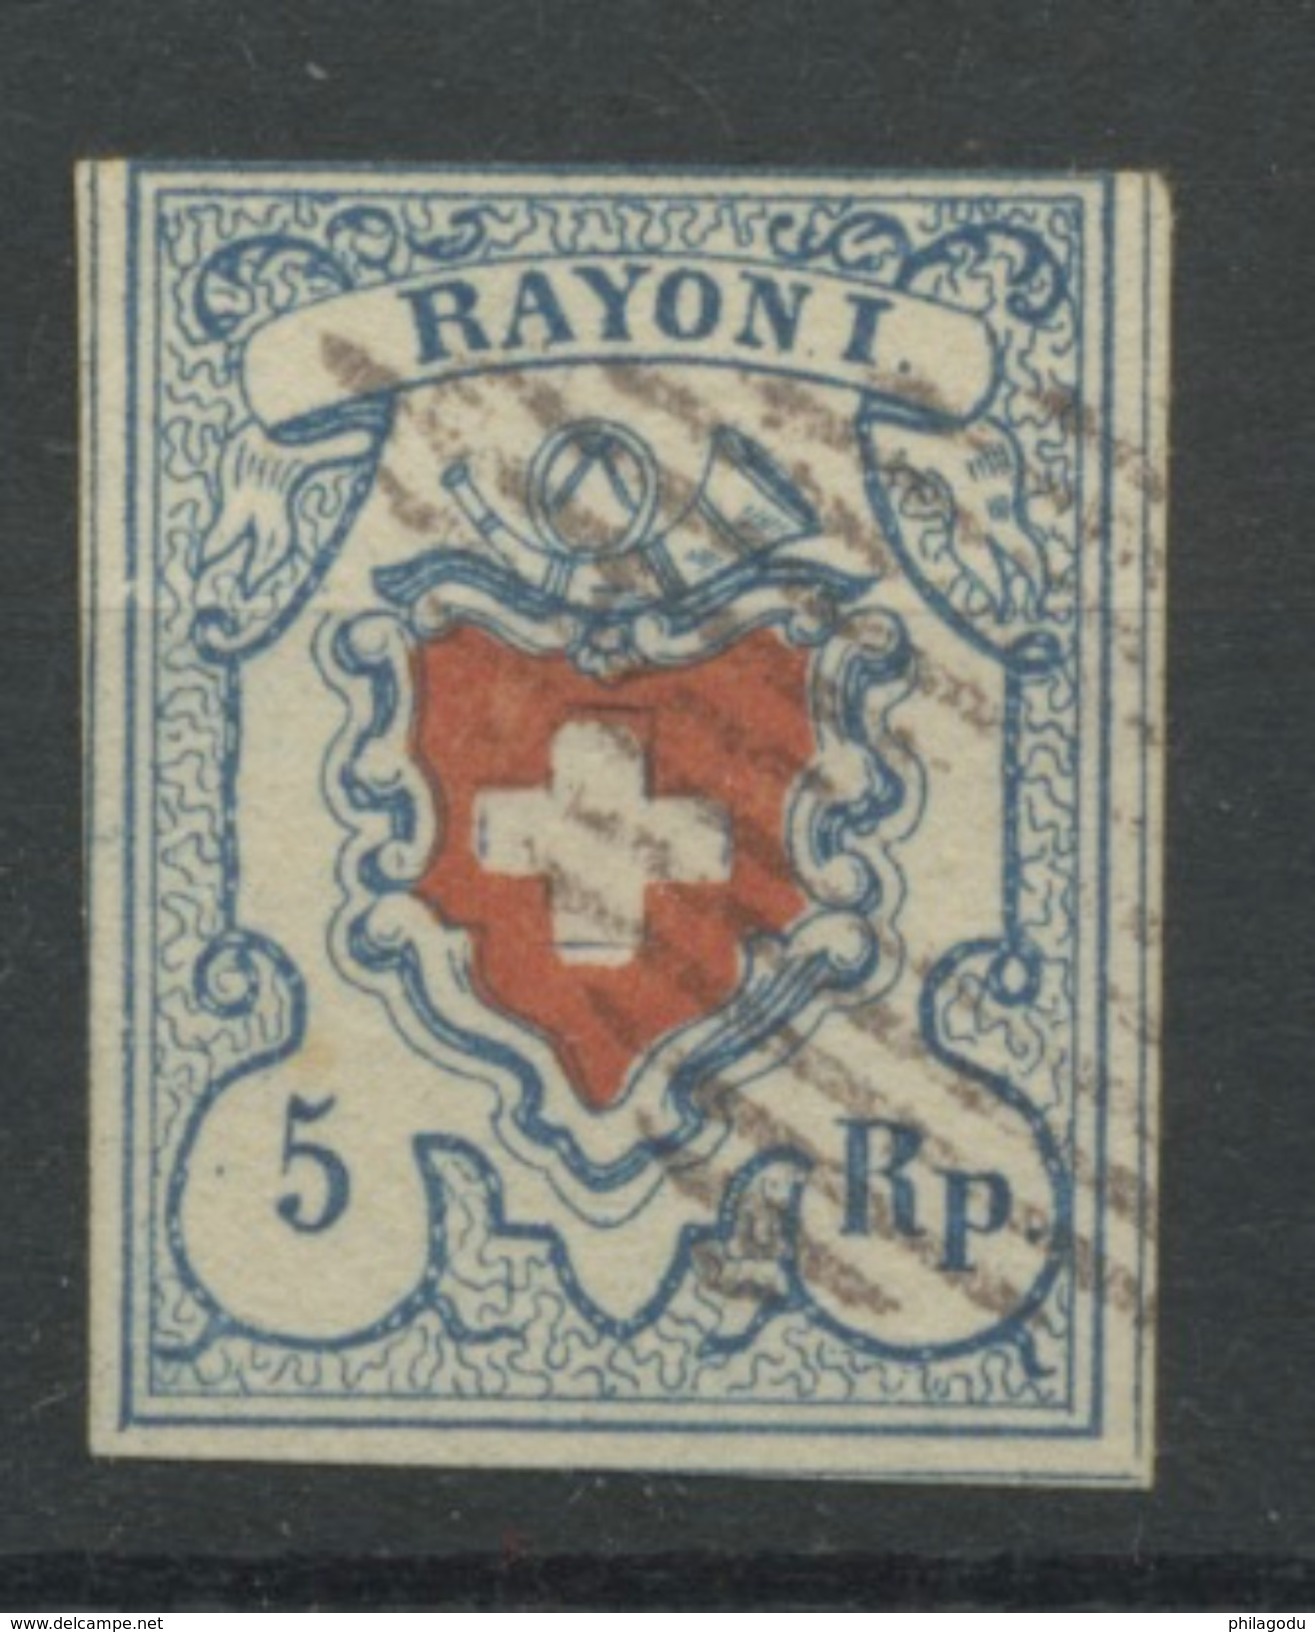 RAYON I  Bleu  Yvert N°14  Oblitération Noire  Cote  600 Euros Dans Yvert   ( Avec Voisins ) - 1843-1852 Federal & Cantonal Stamps